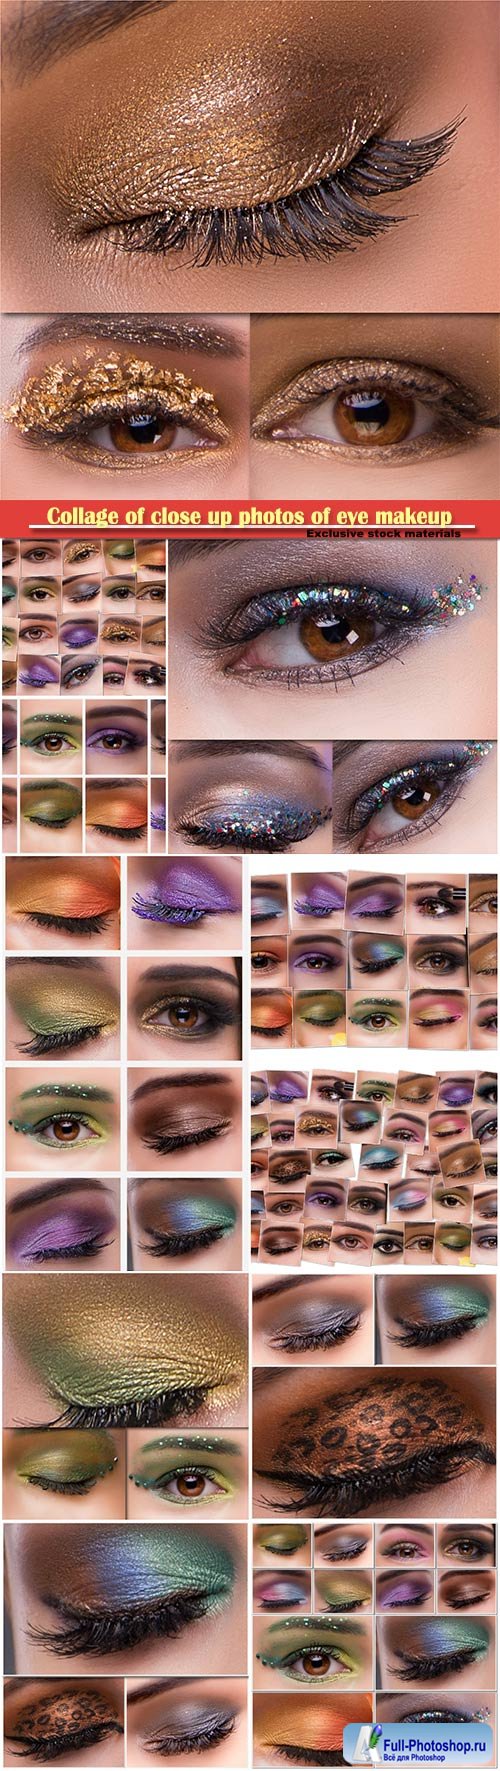 Collage of close up photos of eye makeup